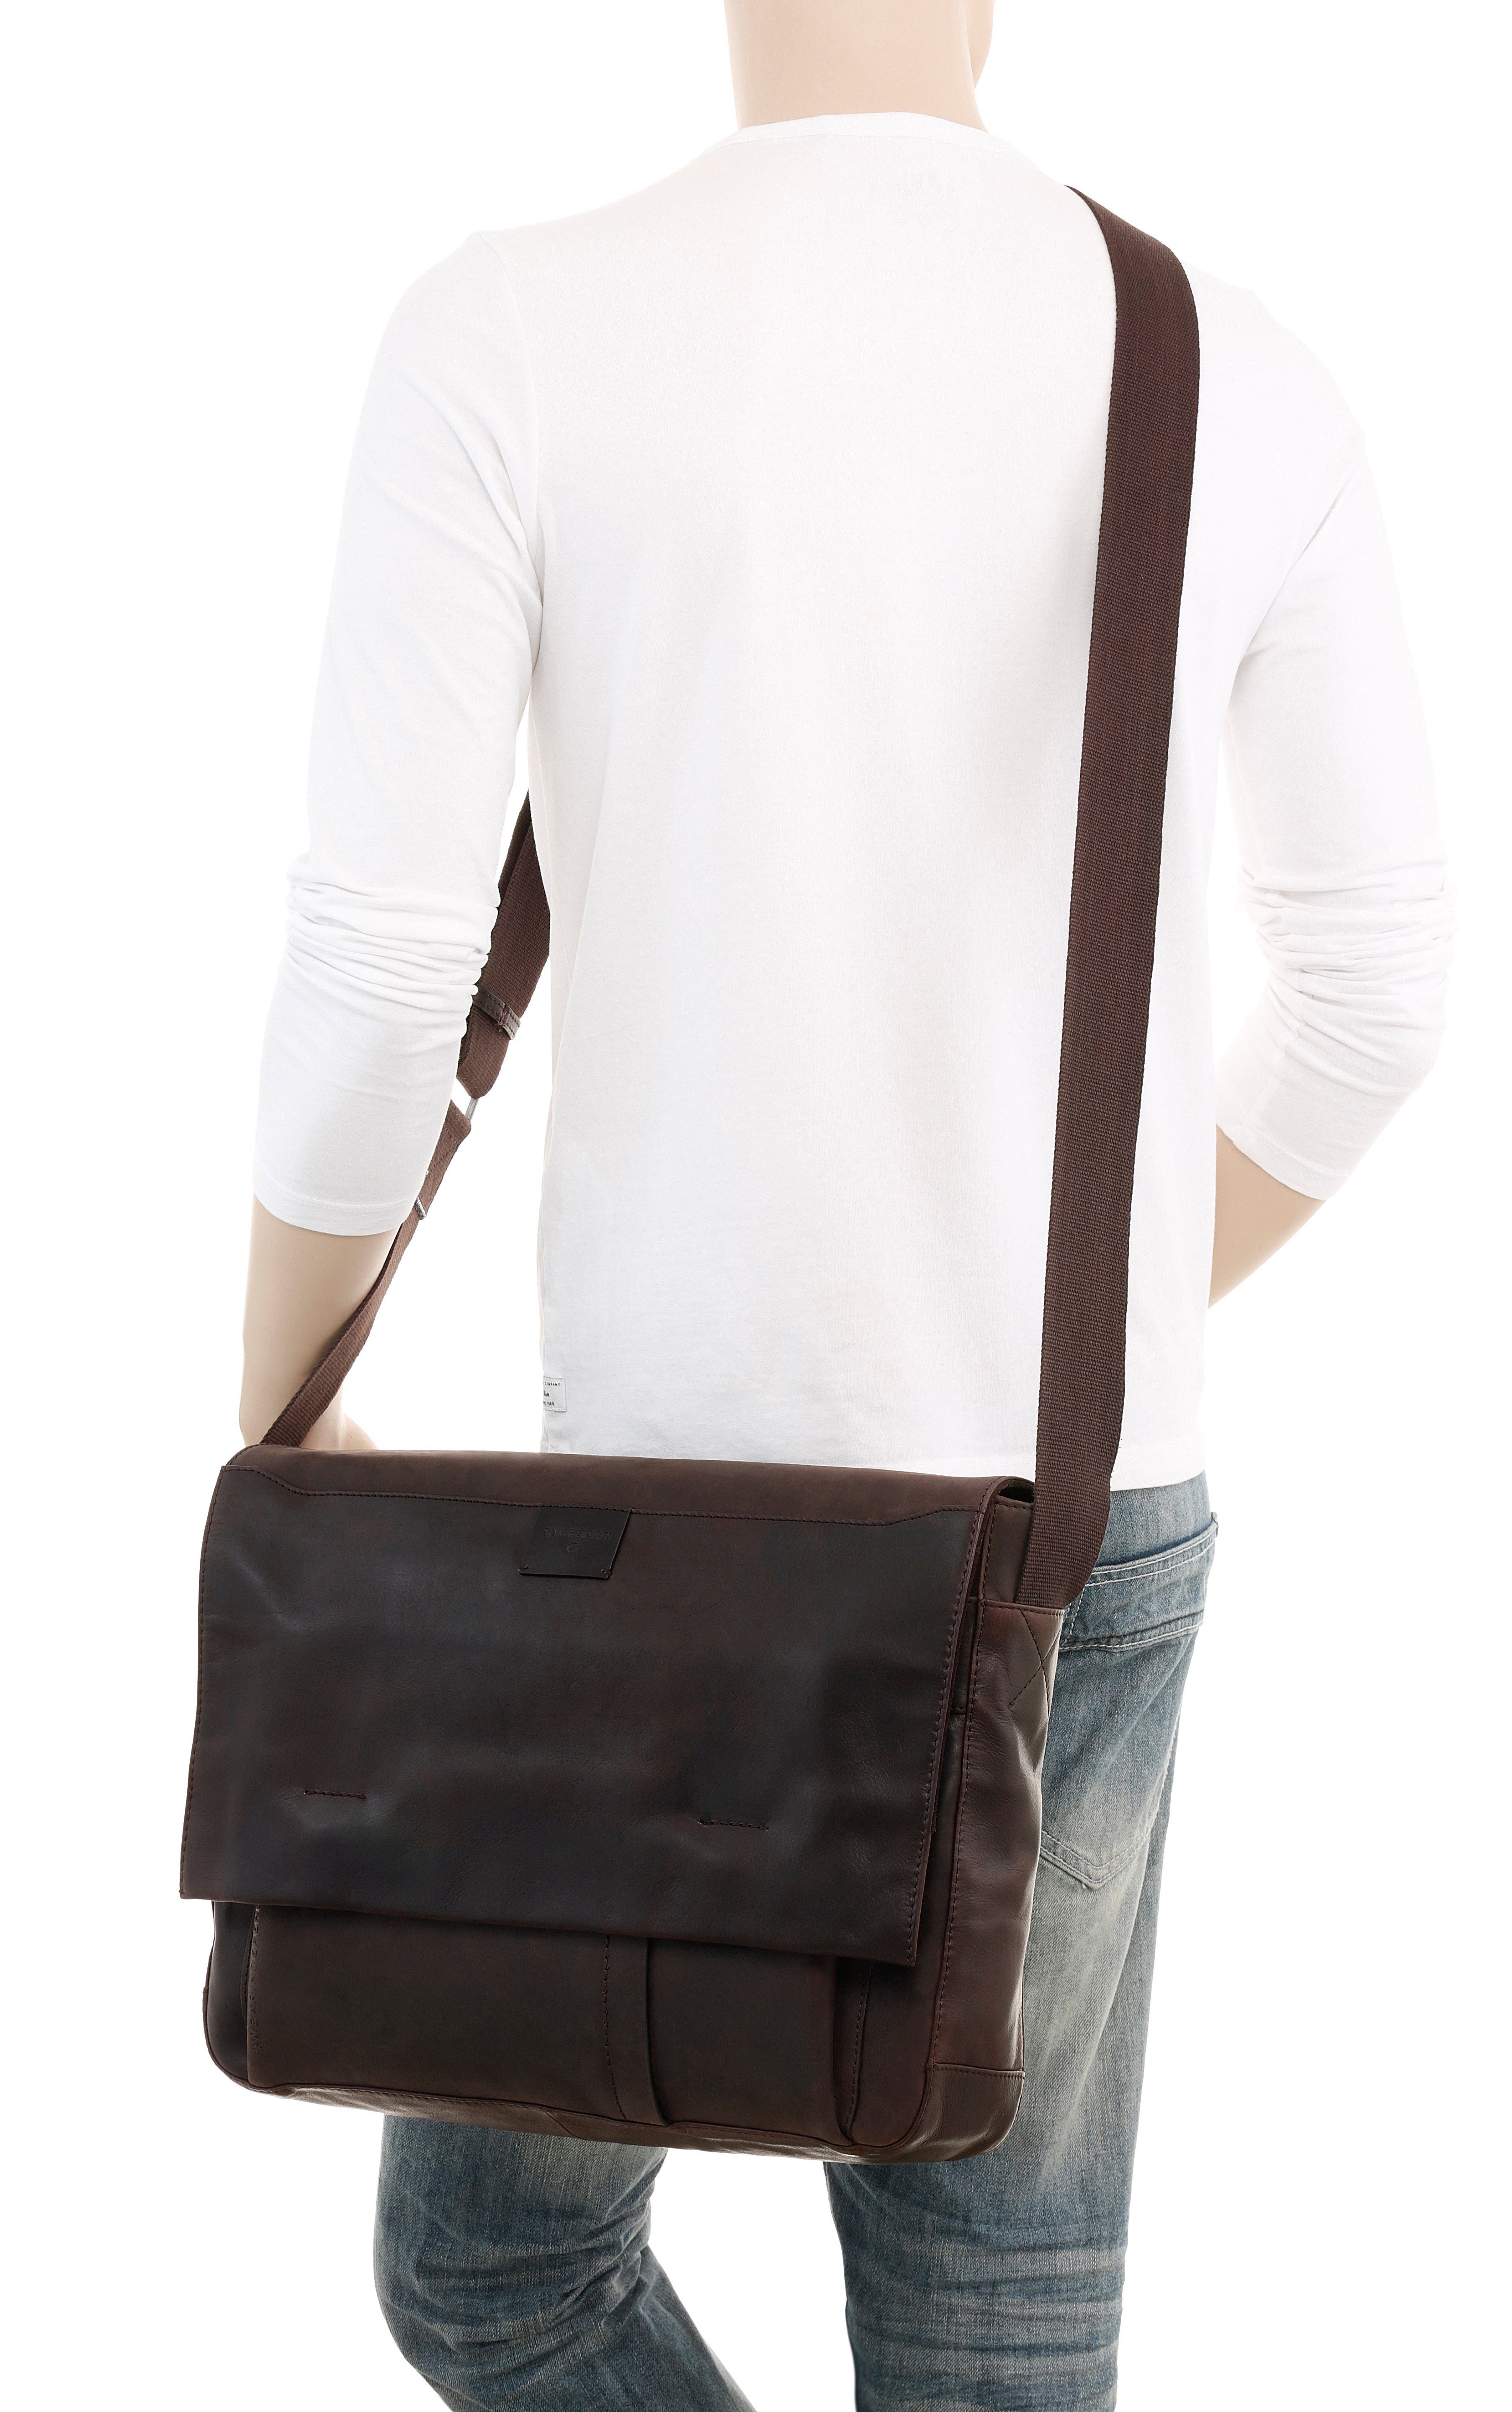 Messengerbag Cortina piazza pandion briefbag shz met gewatteerd laptopvak & Businesstassen OTTO Heren Tassen Laptop 